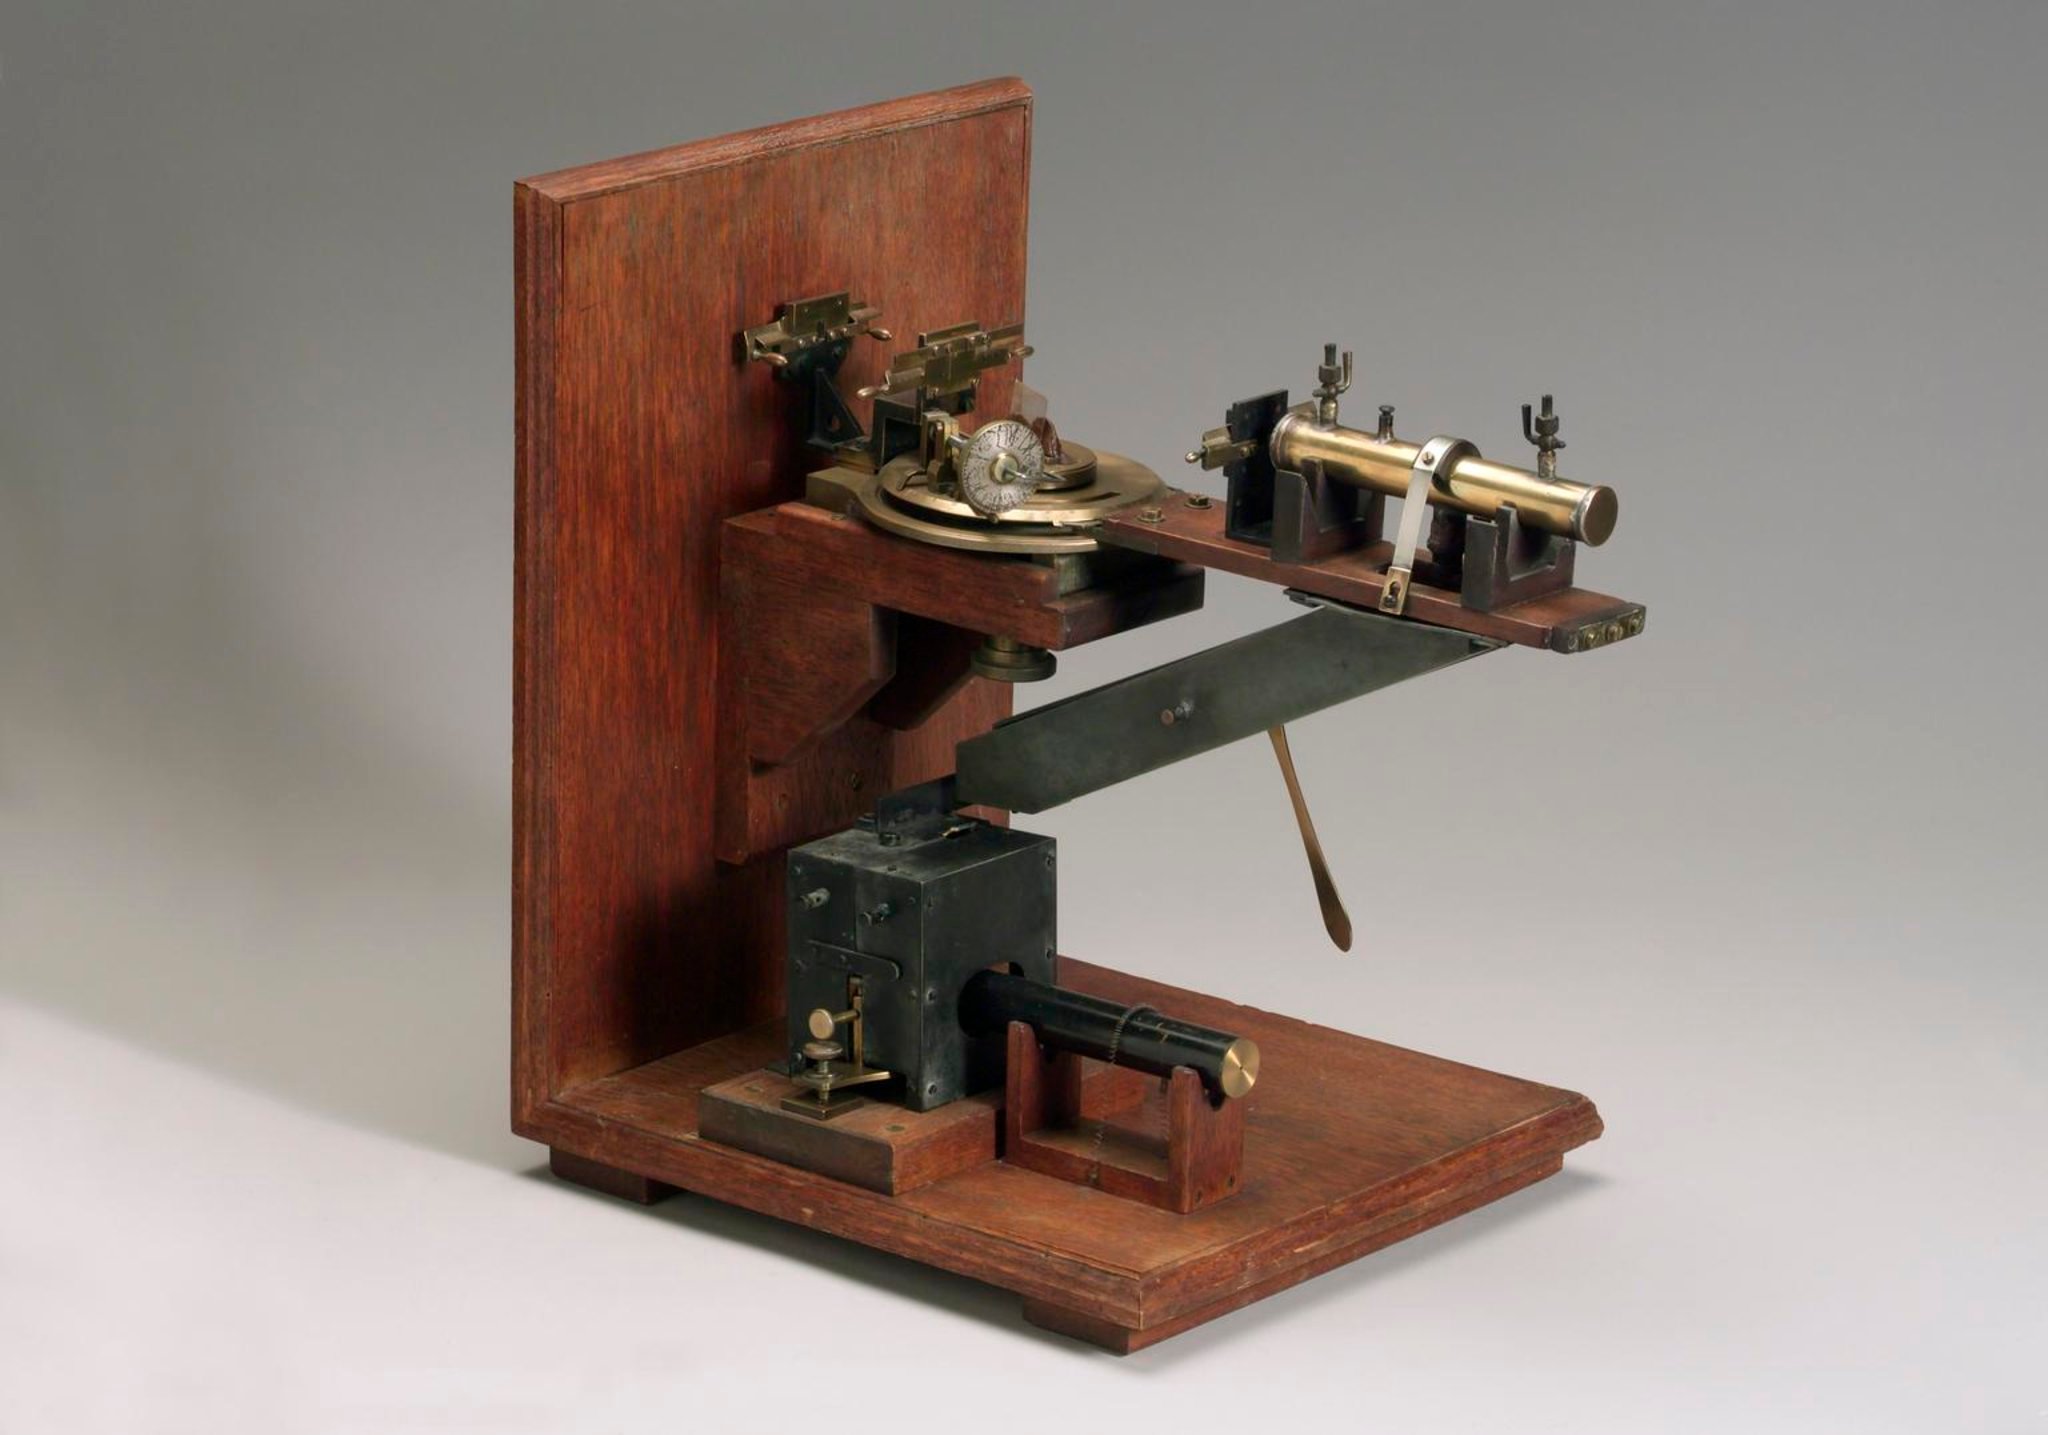 original X-ray spectrometer made by William Bragg